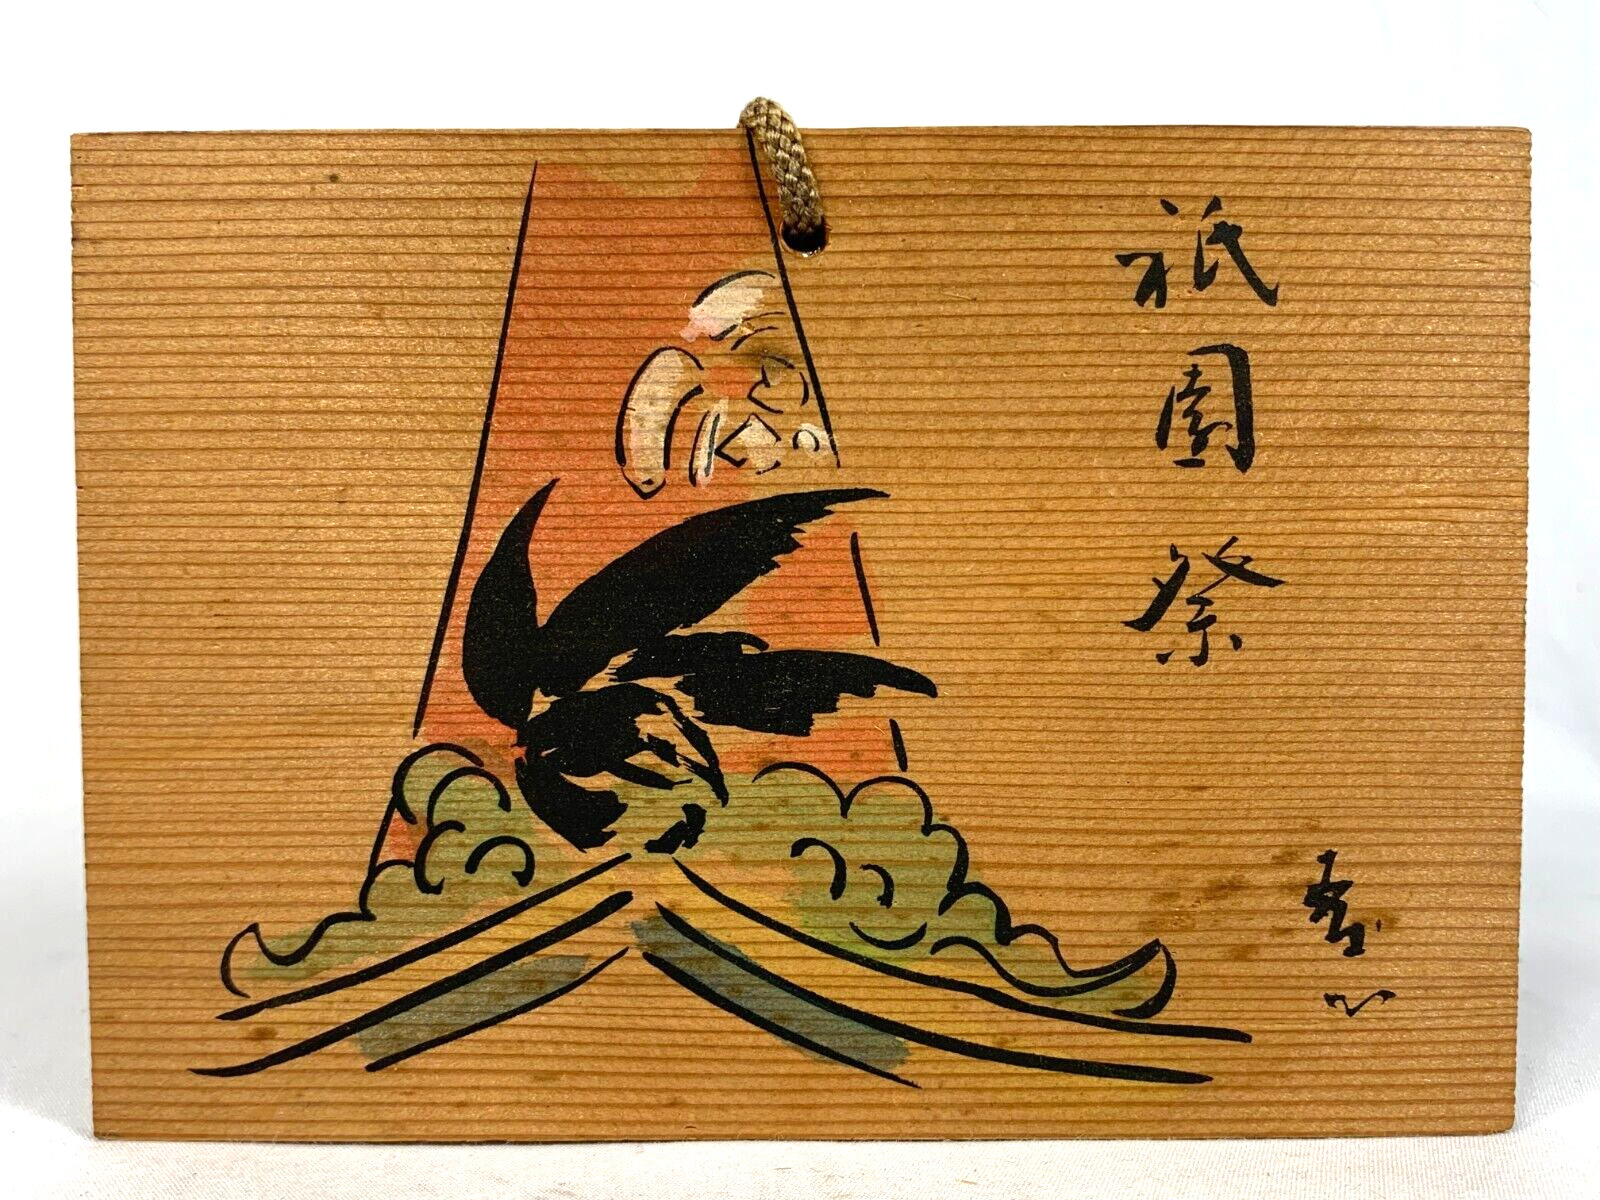 Prayer Board Ema Stylized Mt Fuji with Crow Atop a Roof Tile Kawara Japan